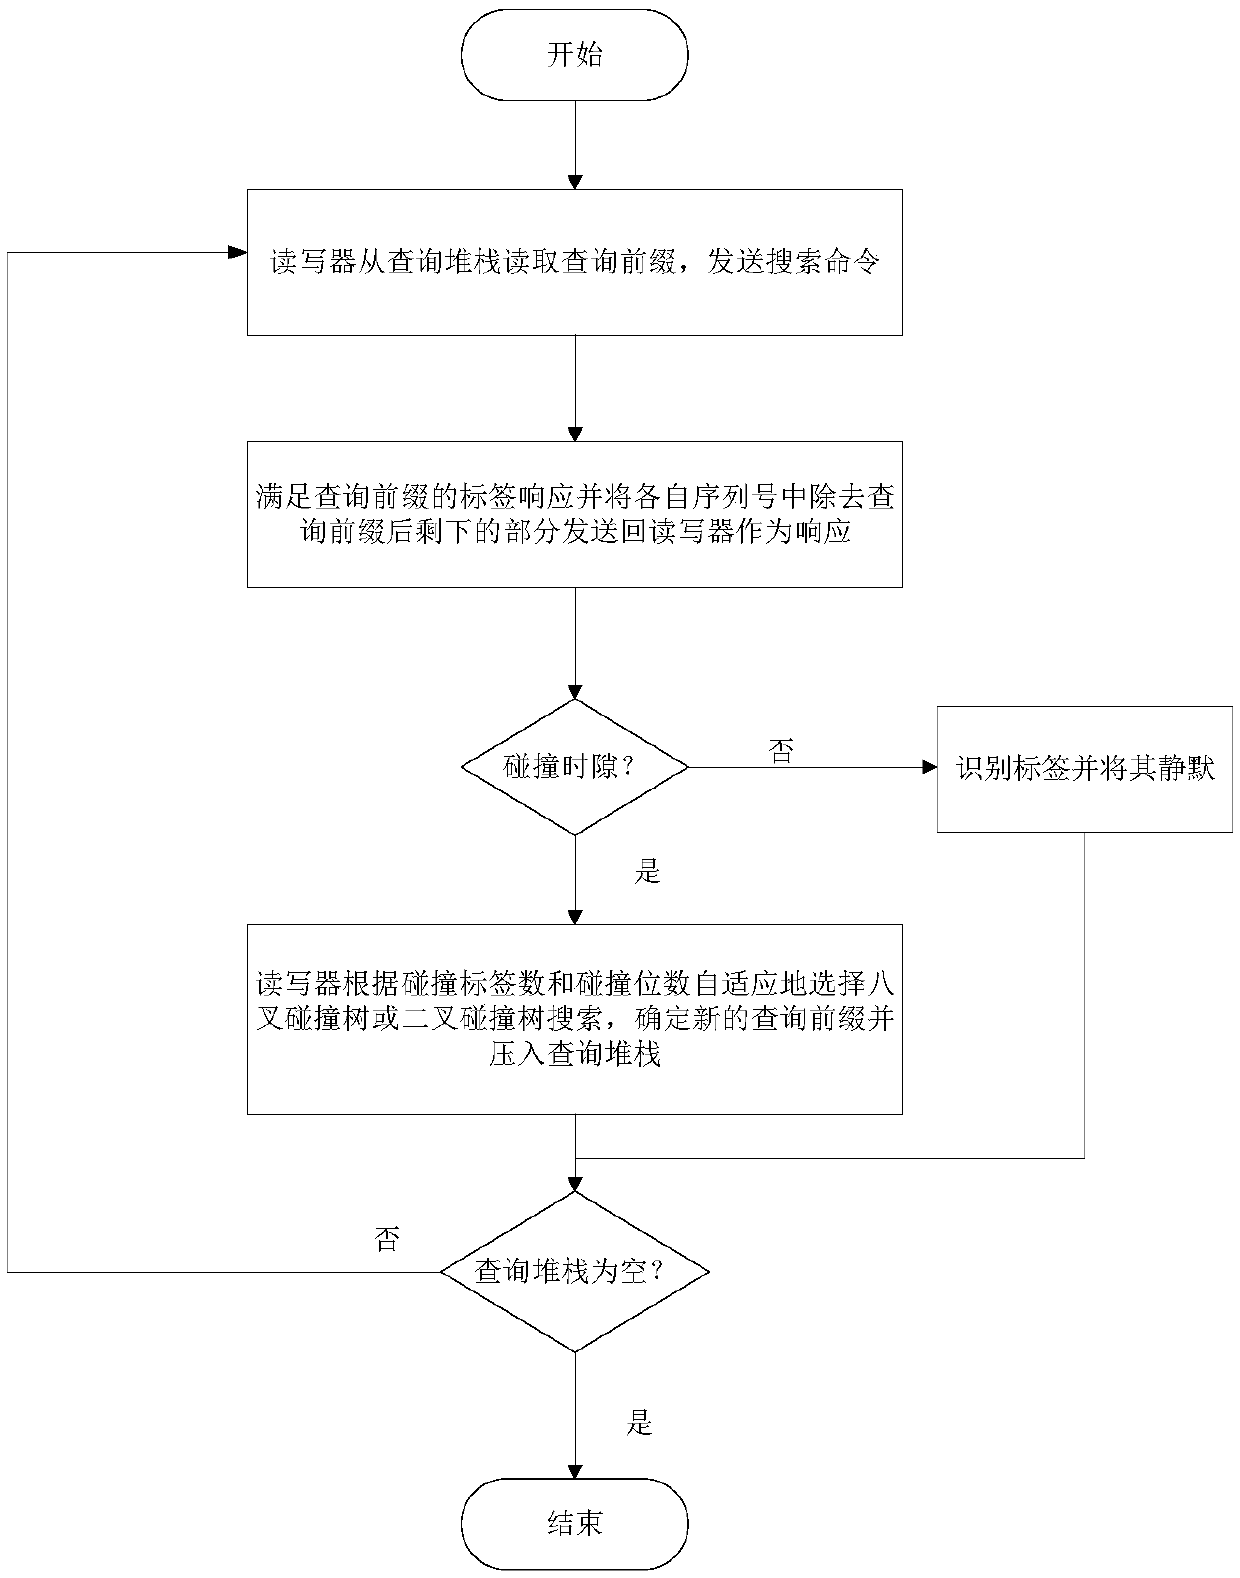 A self-adaptive multi-way tree anti-collision method based on a collision tree